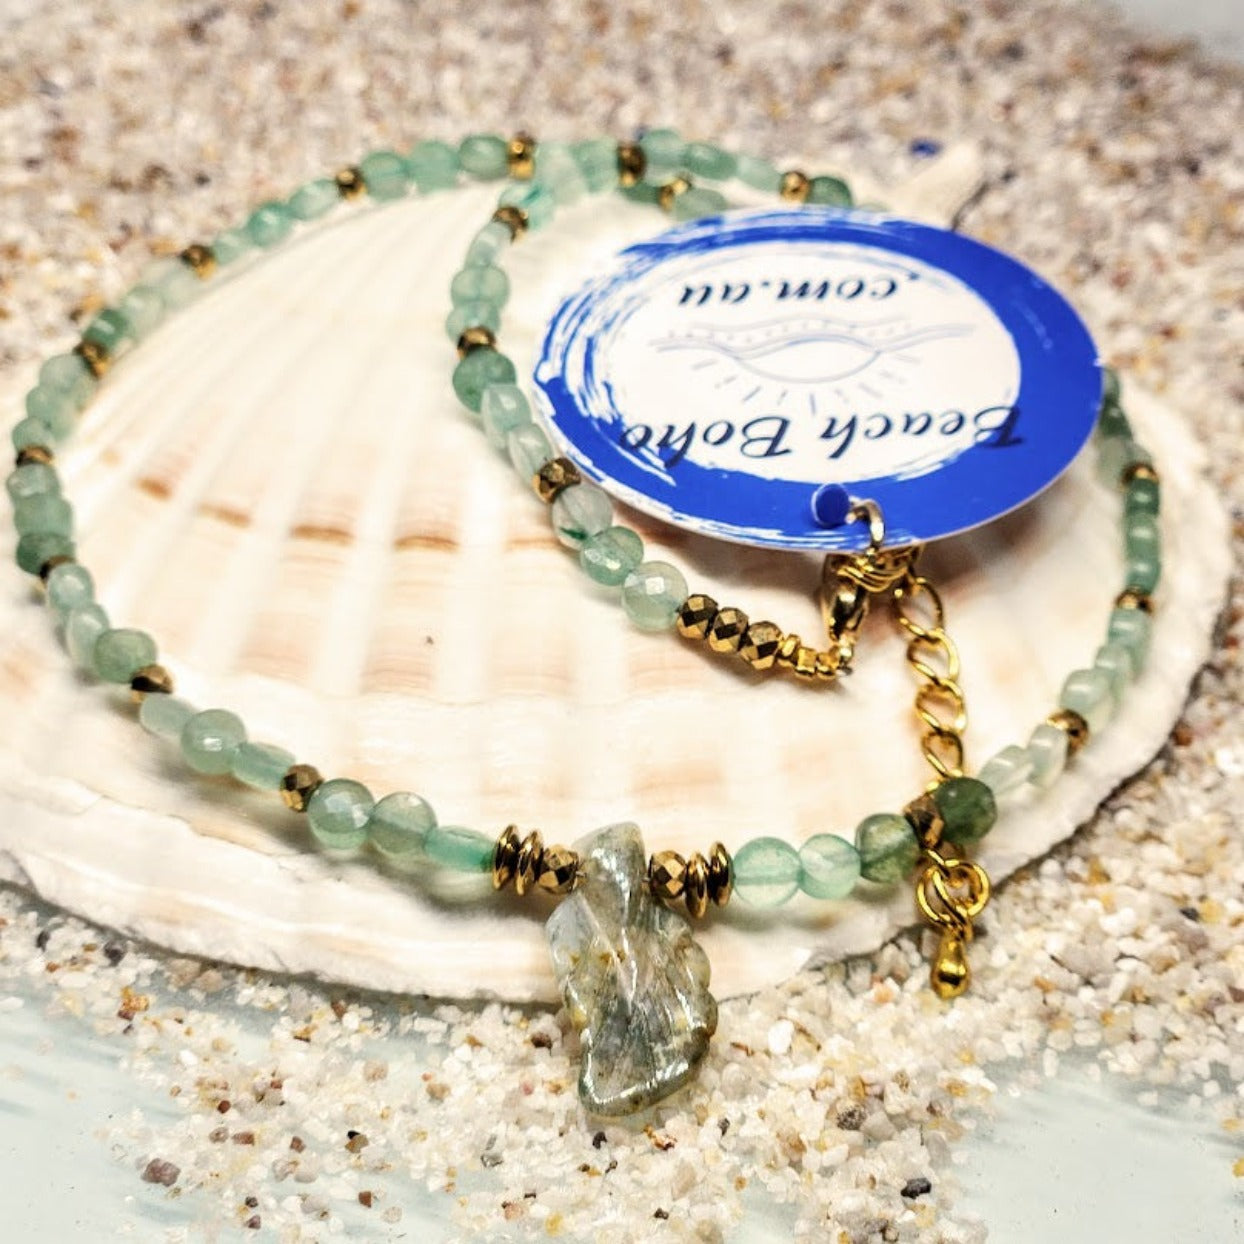 GREEN LEAF - AVENTURINE GOLD NECKLACE - Premium necklaces from www.beachboho.com.au - Just $75! Shop now at www.beachboho.com.au